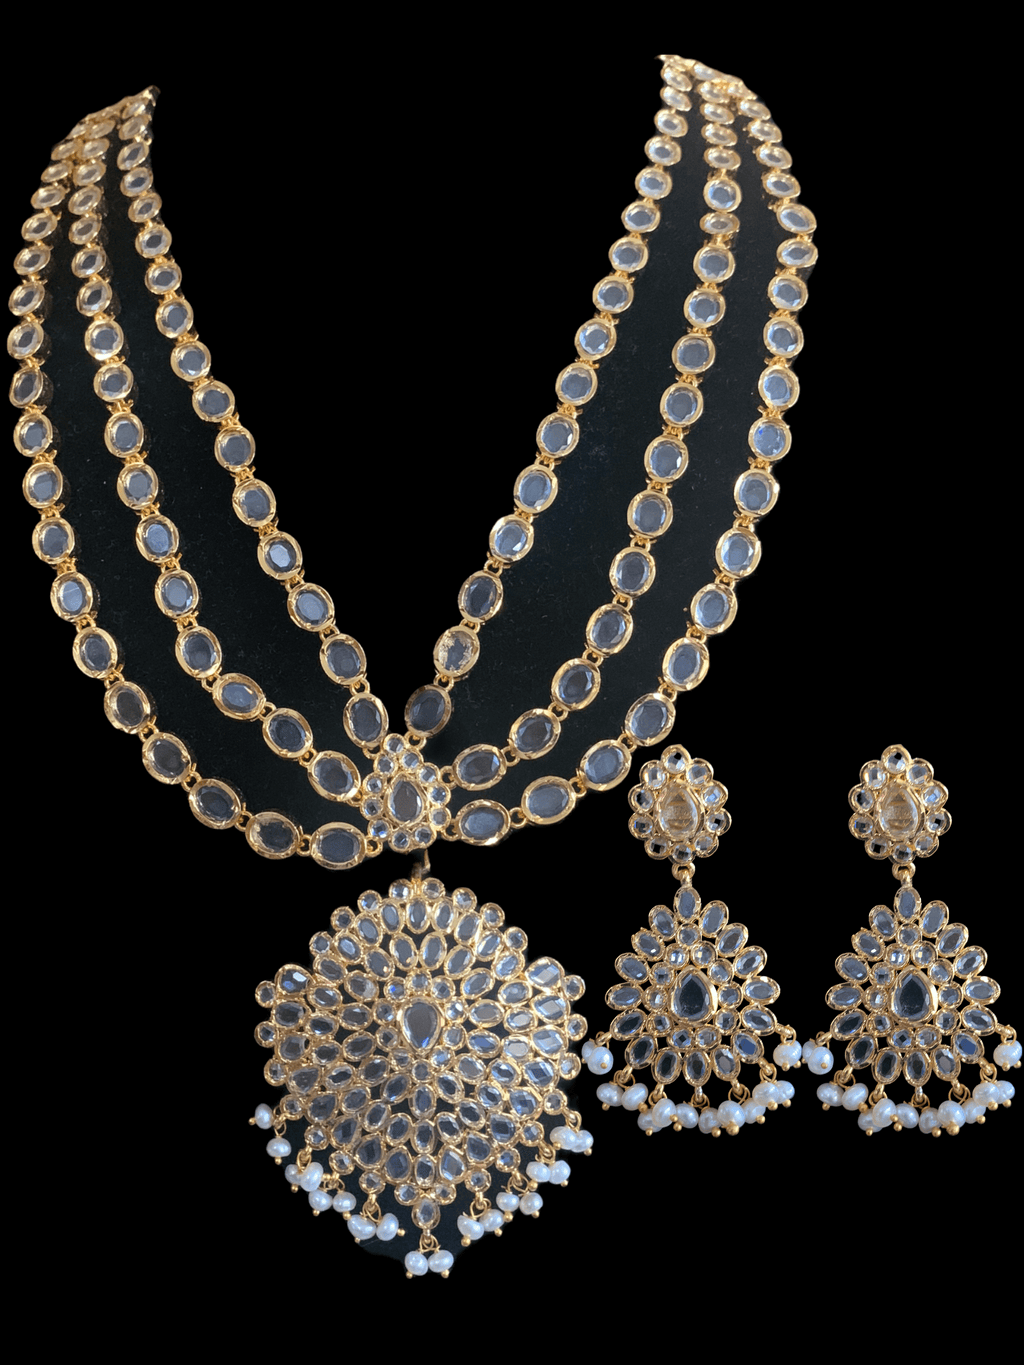 Rani haar – Deccan Jewelry